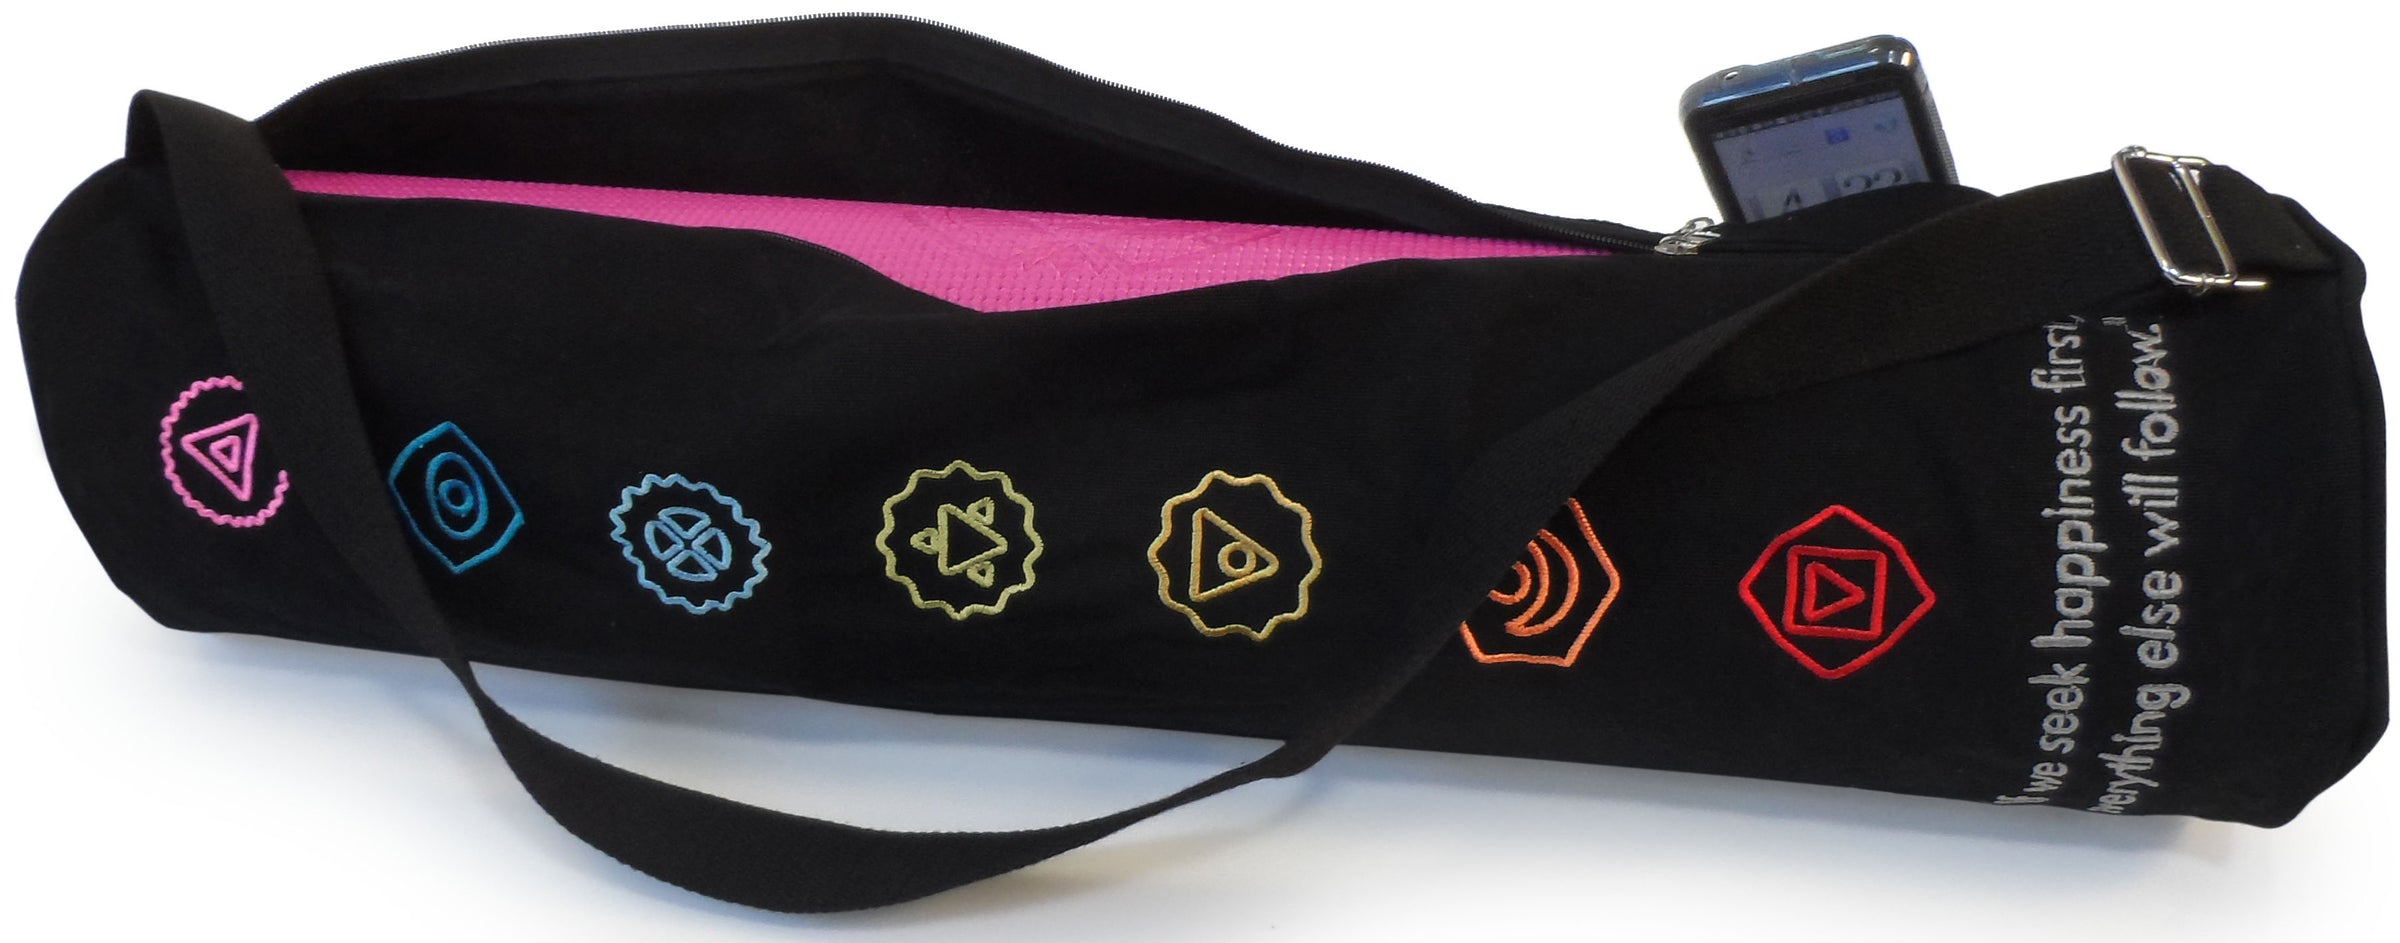 Cotton Yoga Mat Bag – Chakra Symbols – Earths Elements